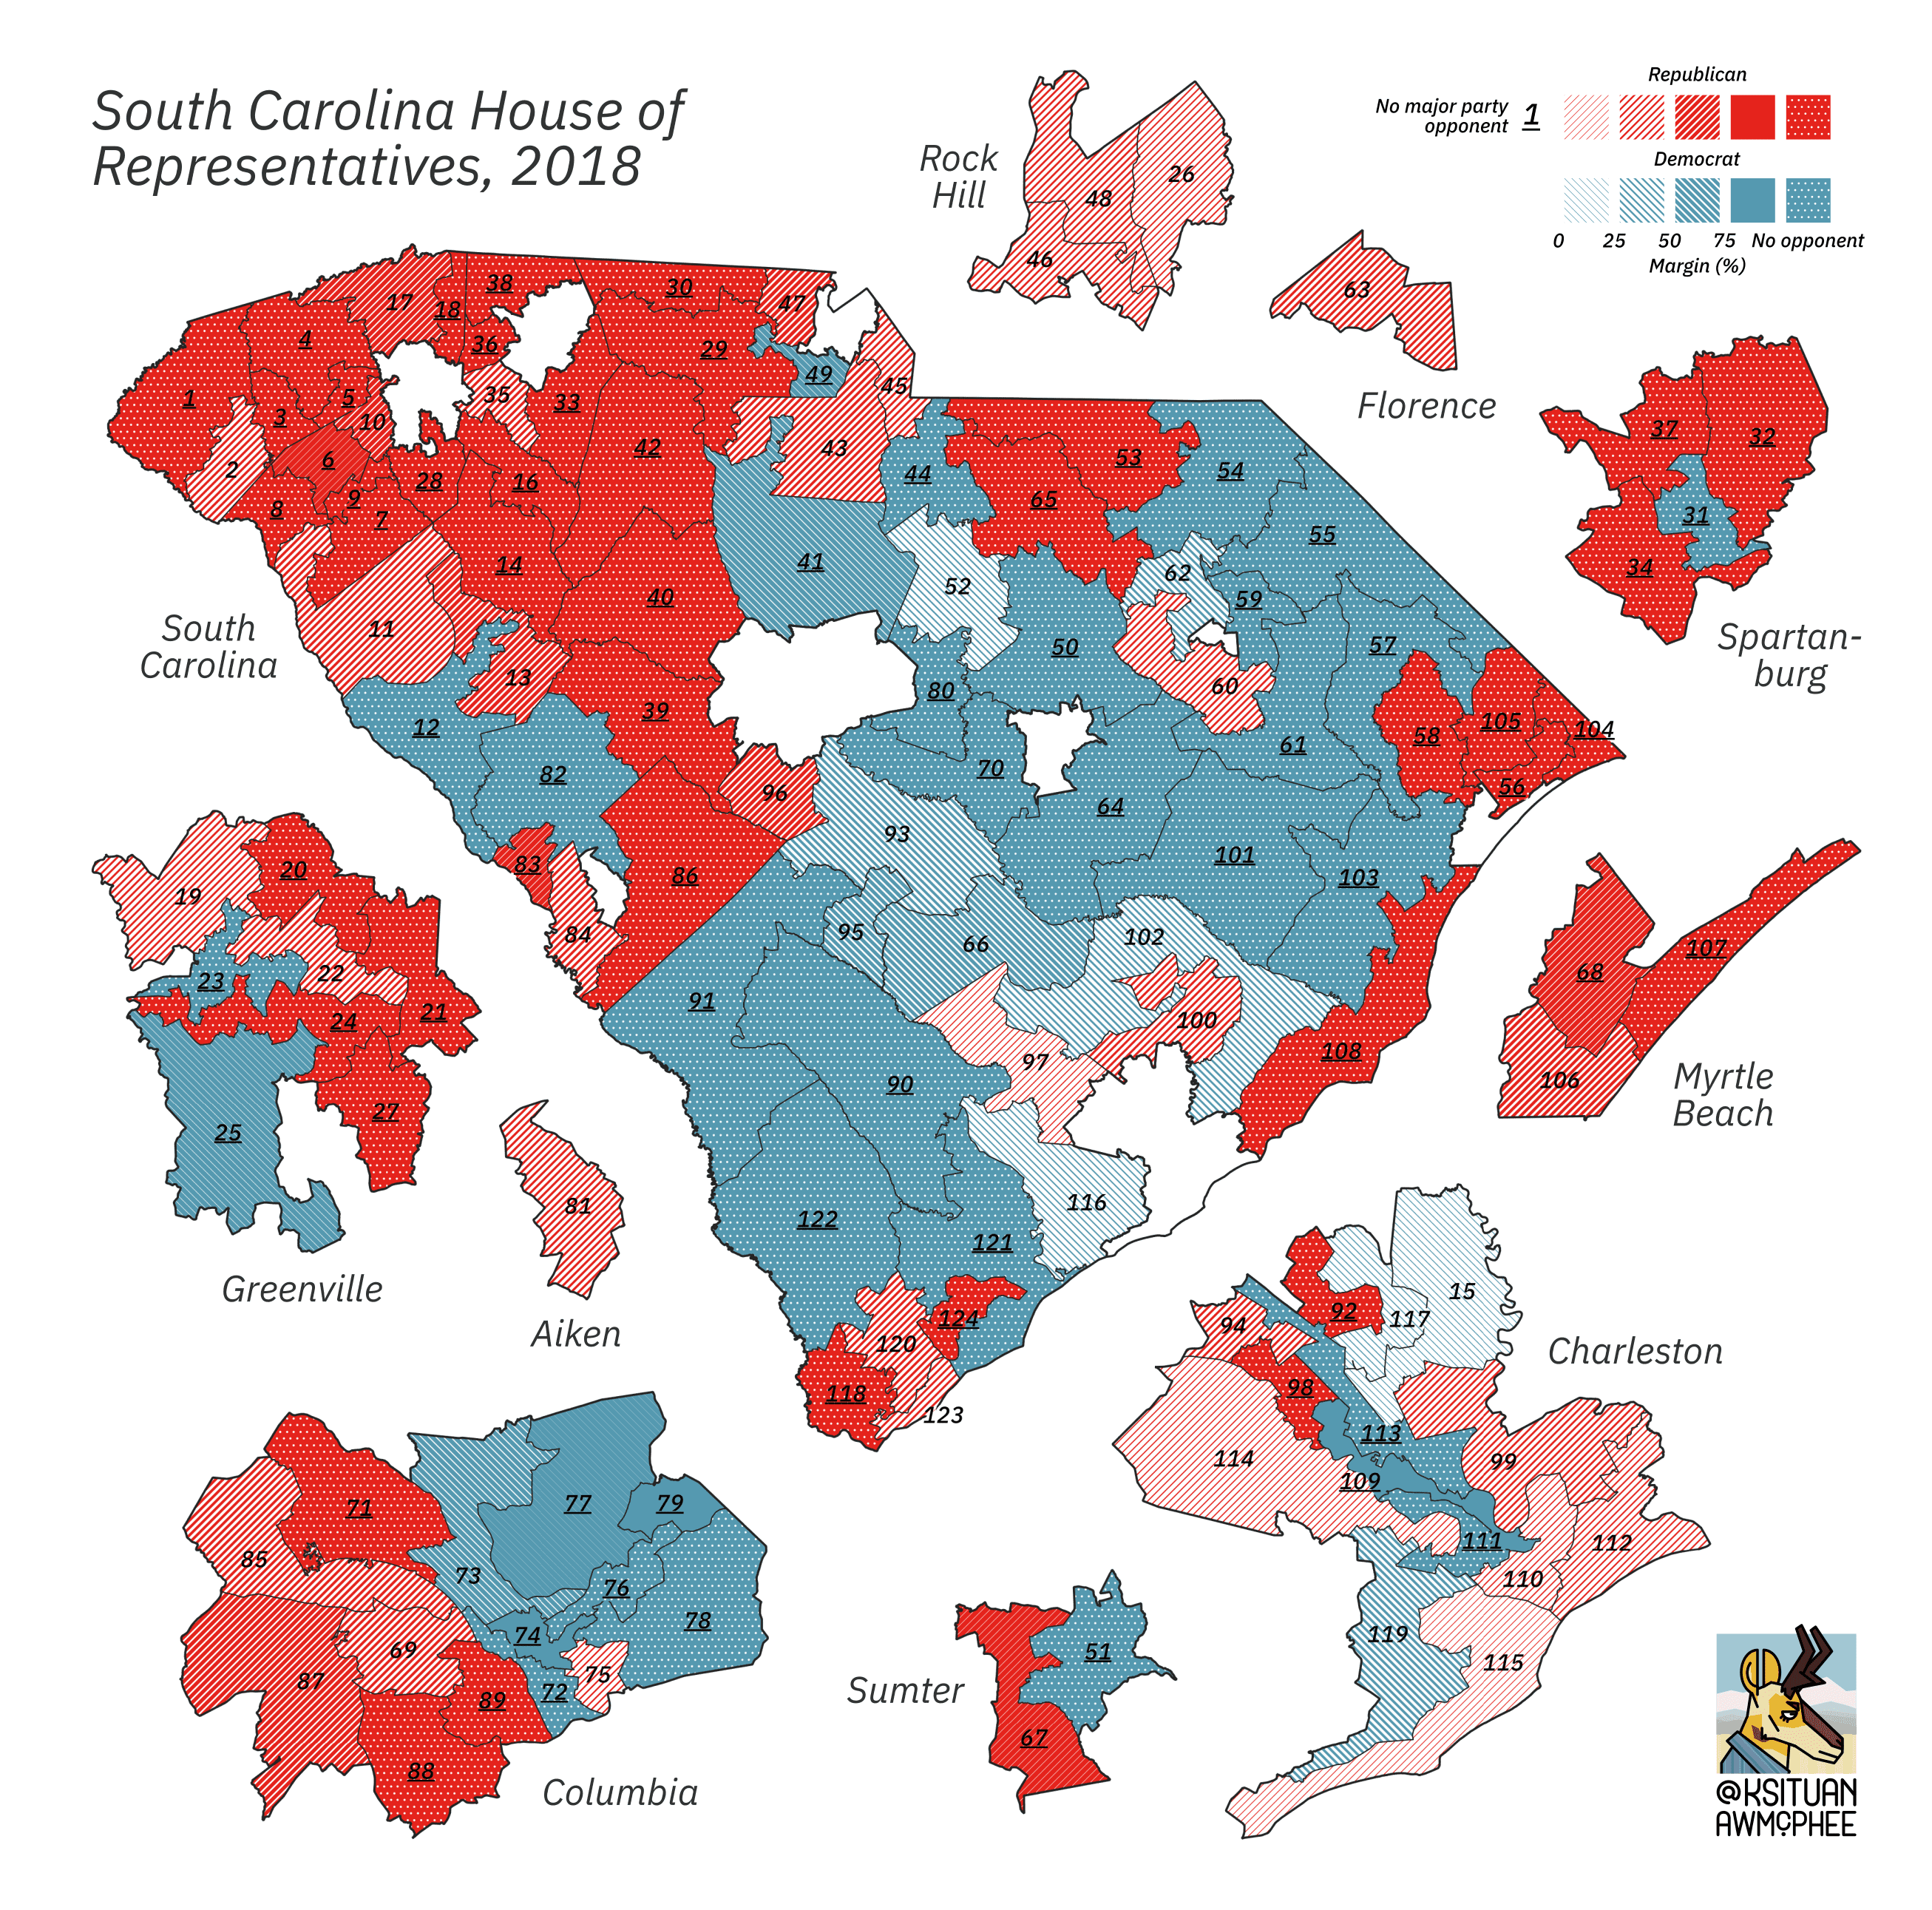 A political map of South Carolina.